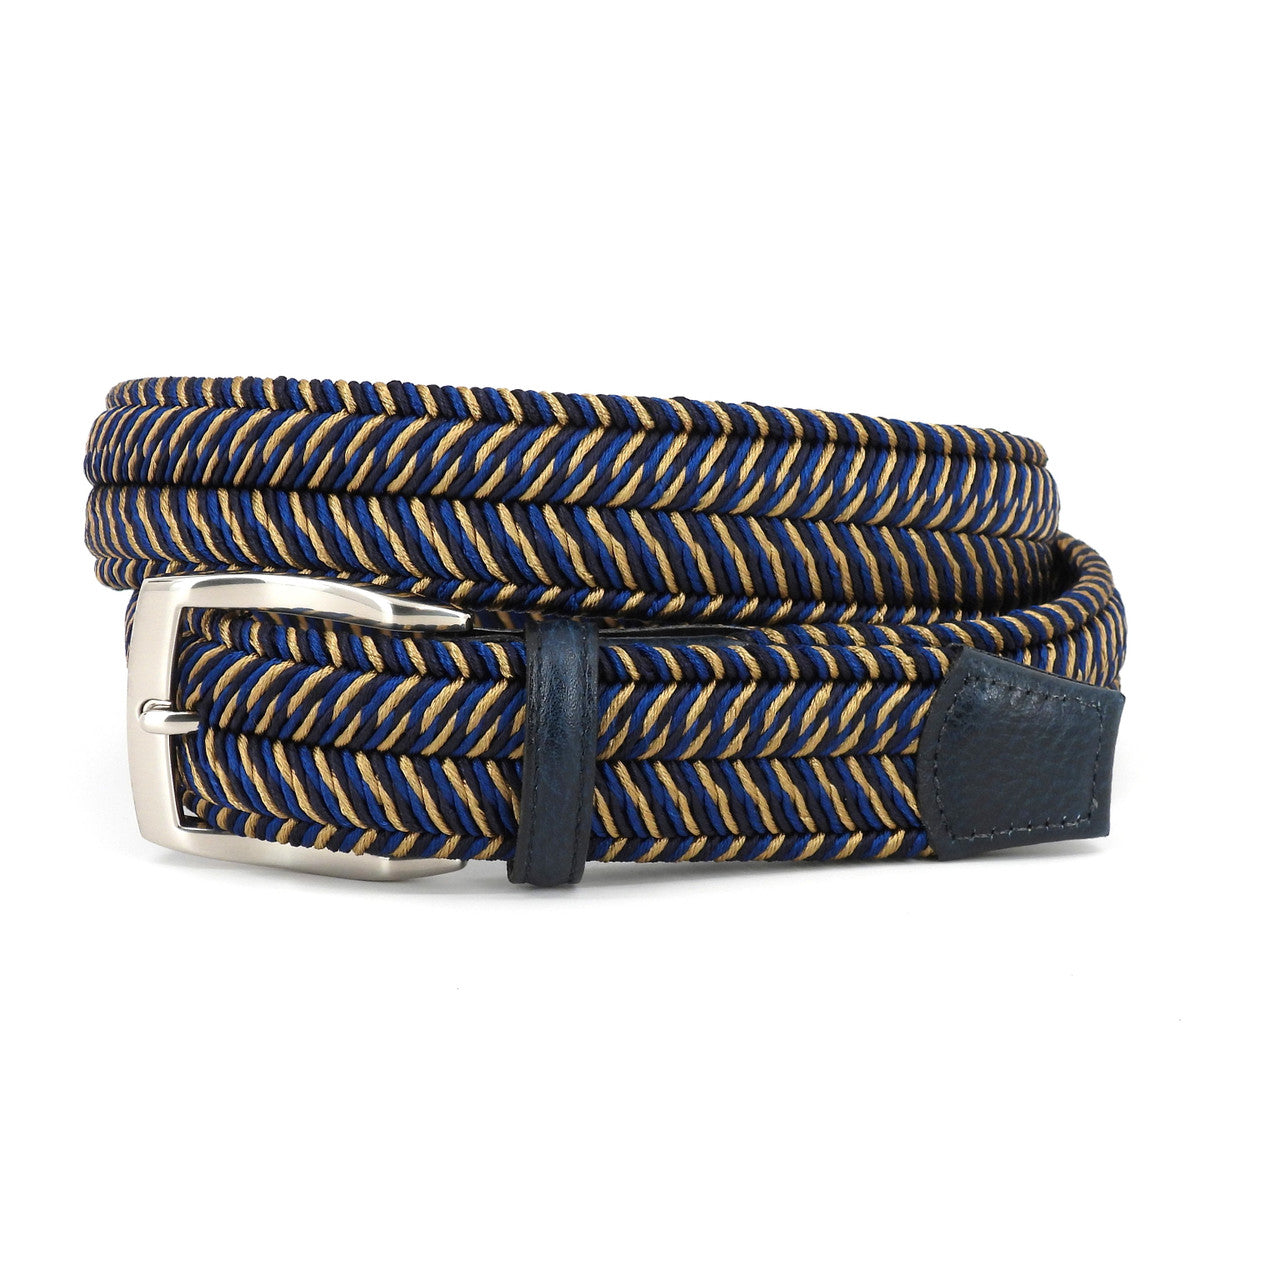 Italian Woven Herringbone Stretch Rayon Casual Belt in Navy & Khaki by Torino Leather